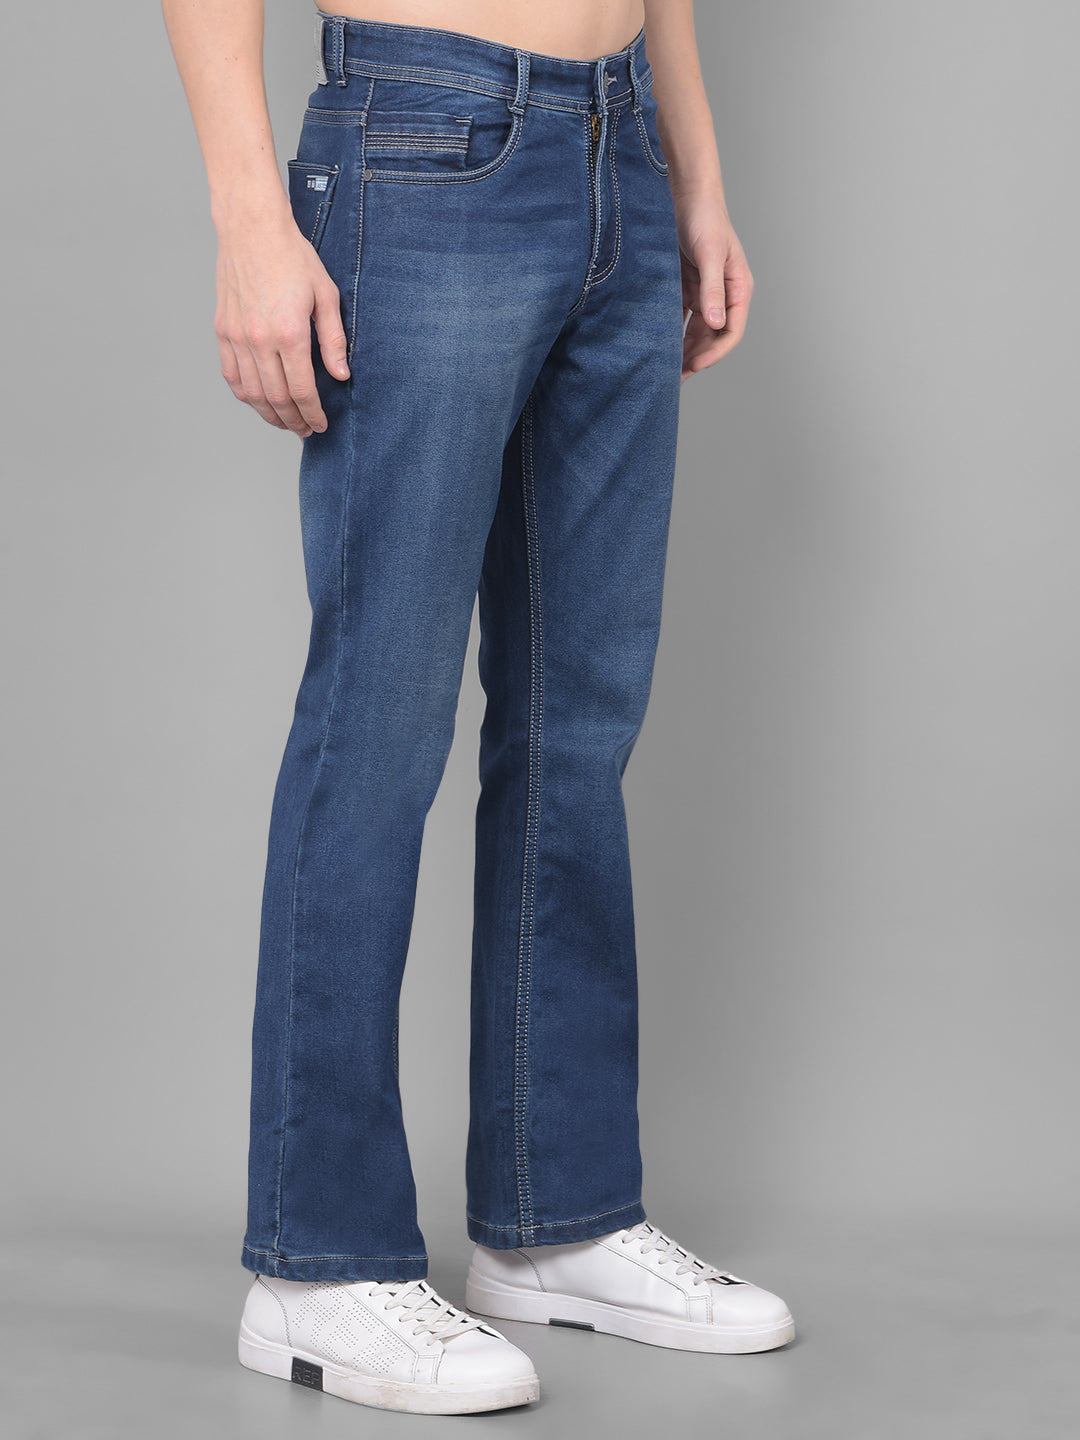 J BRAND Boot Cut Size 30 Dark Wash Blue Denim Jeans Women's